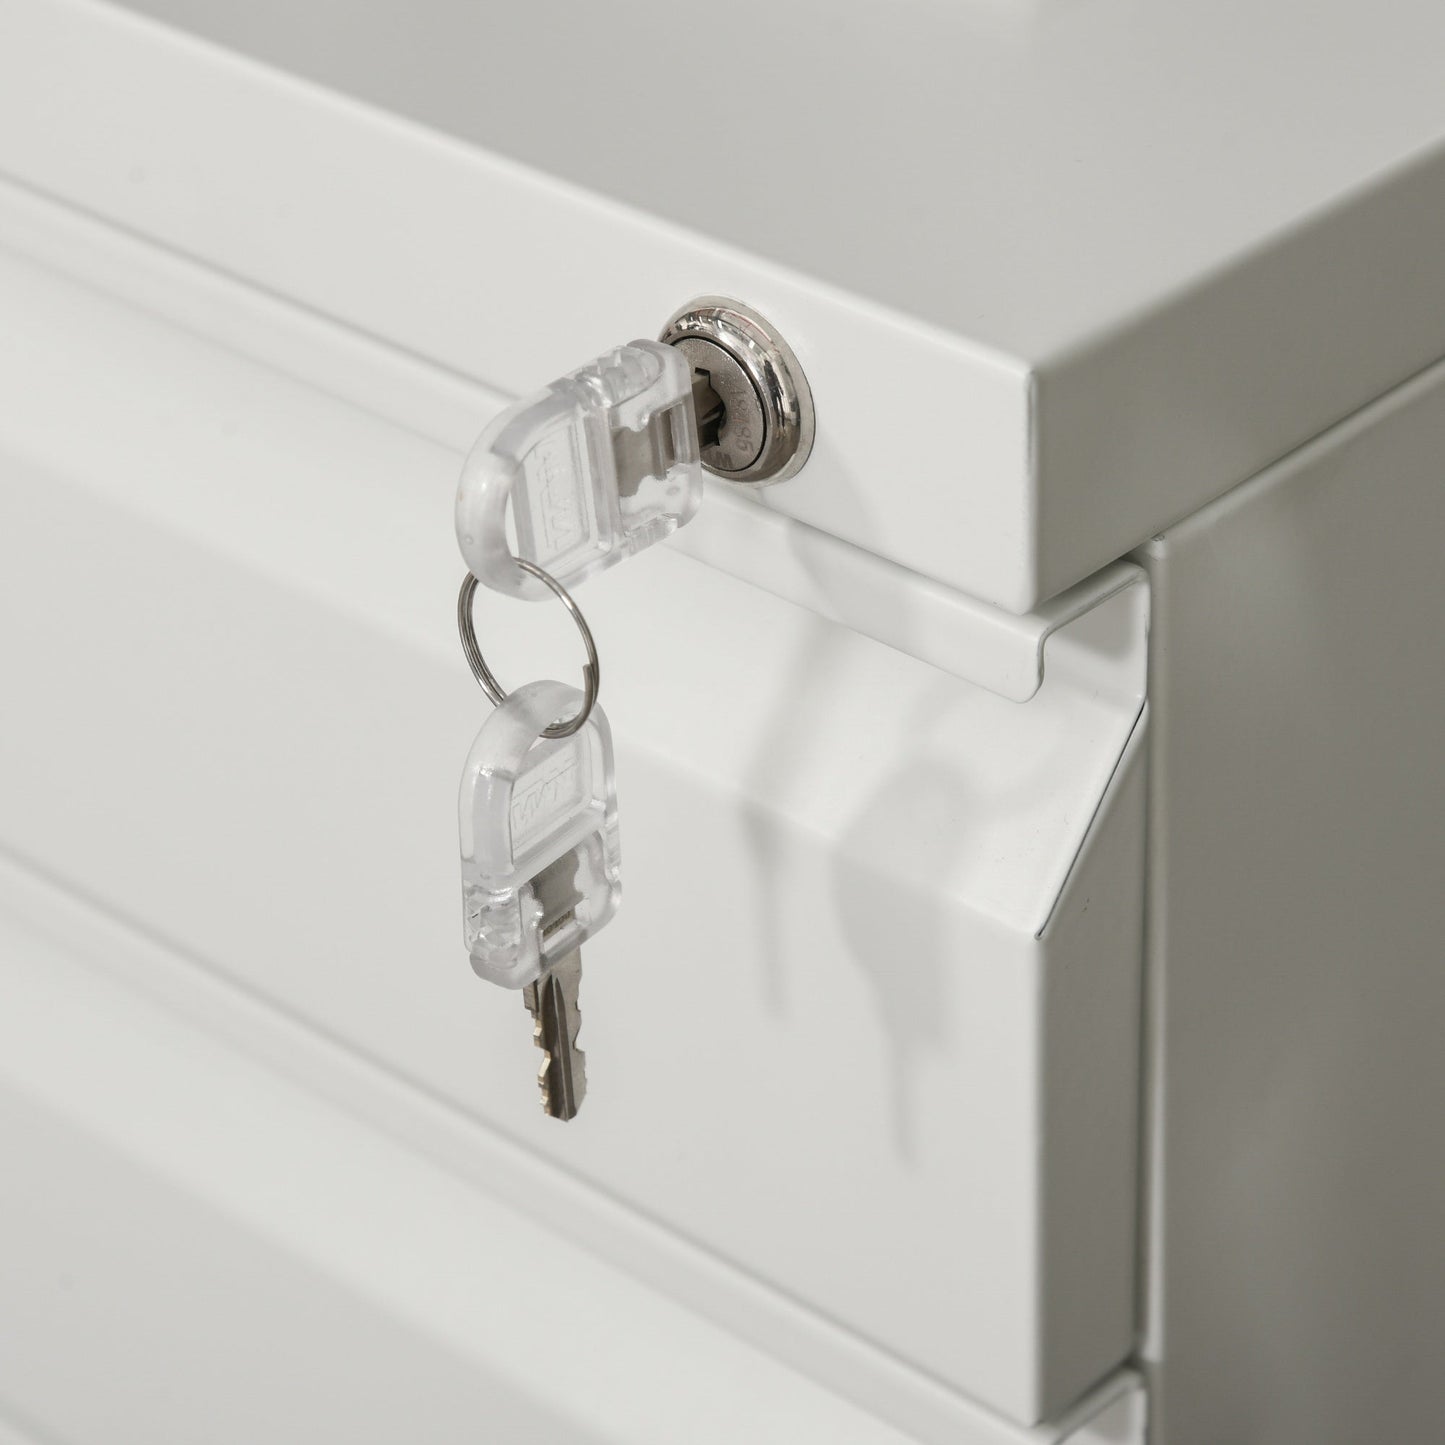 ProperAV Extra Steel 3-Drawer Rolling Filing Cabinet - White - maplin.co.uk